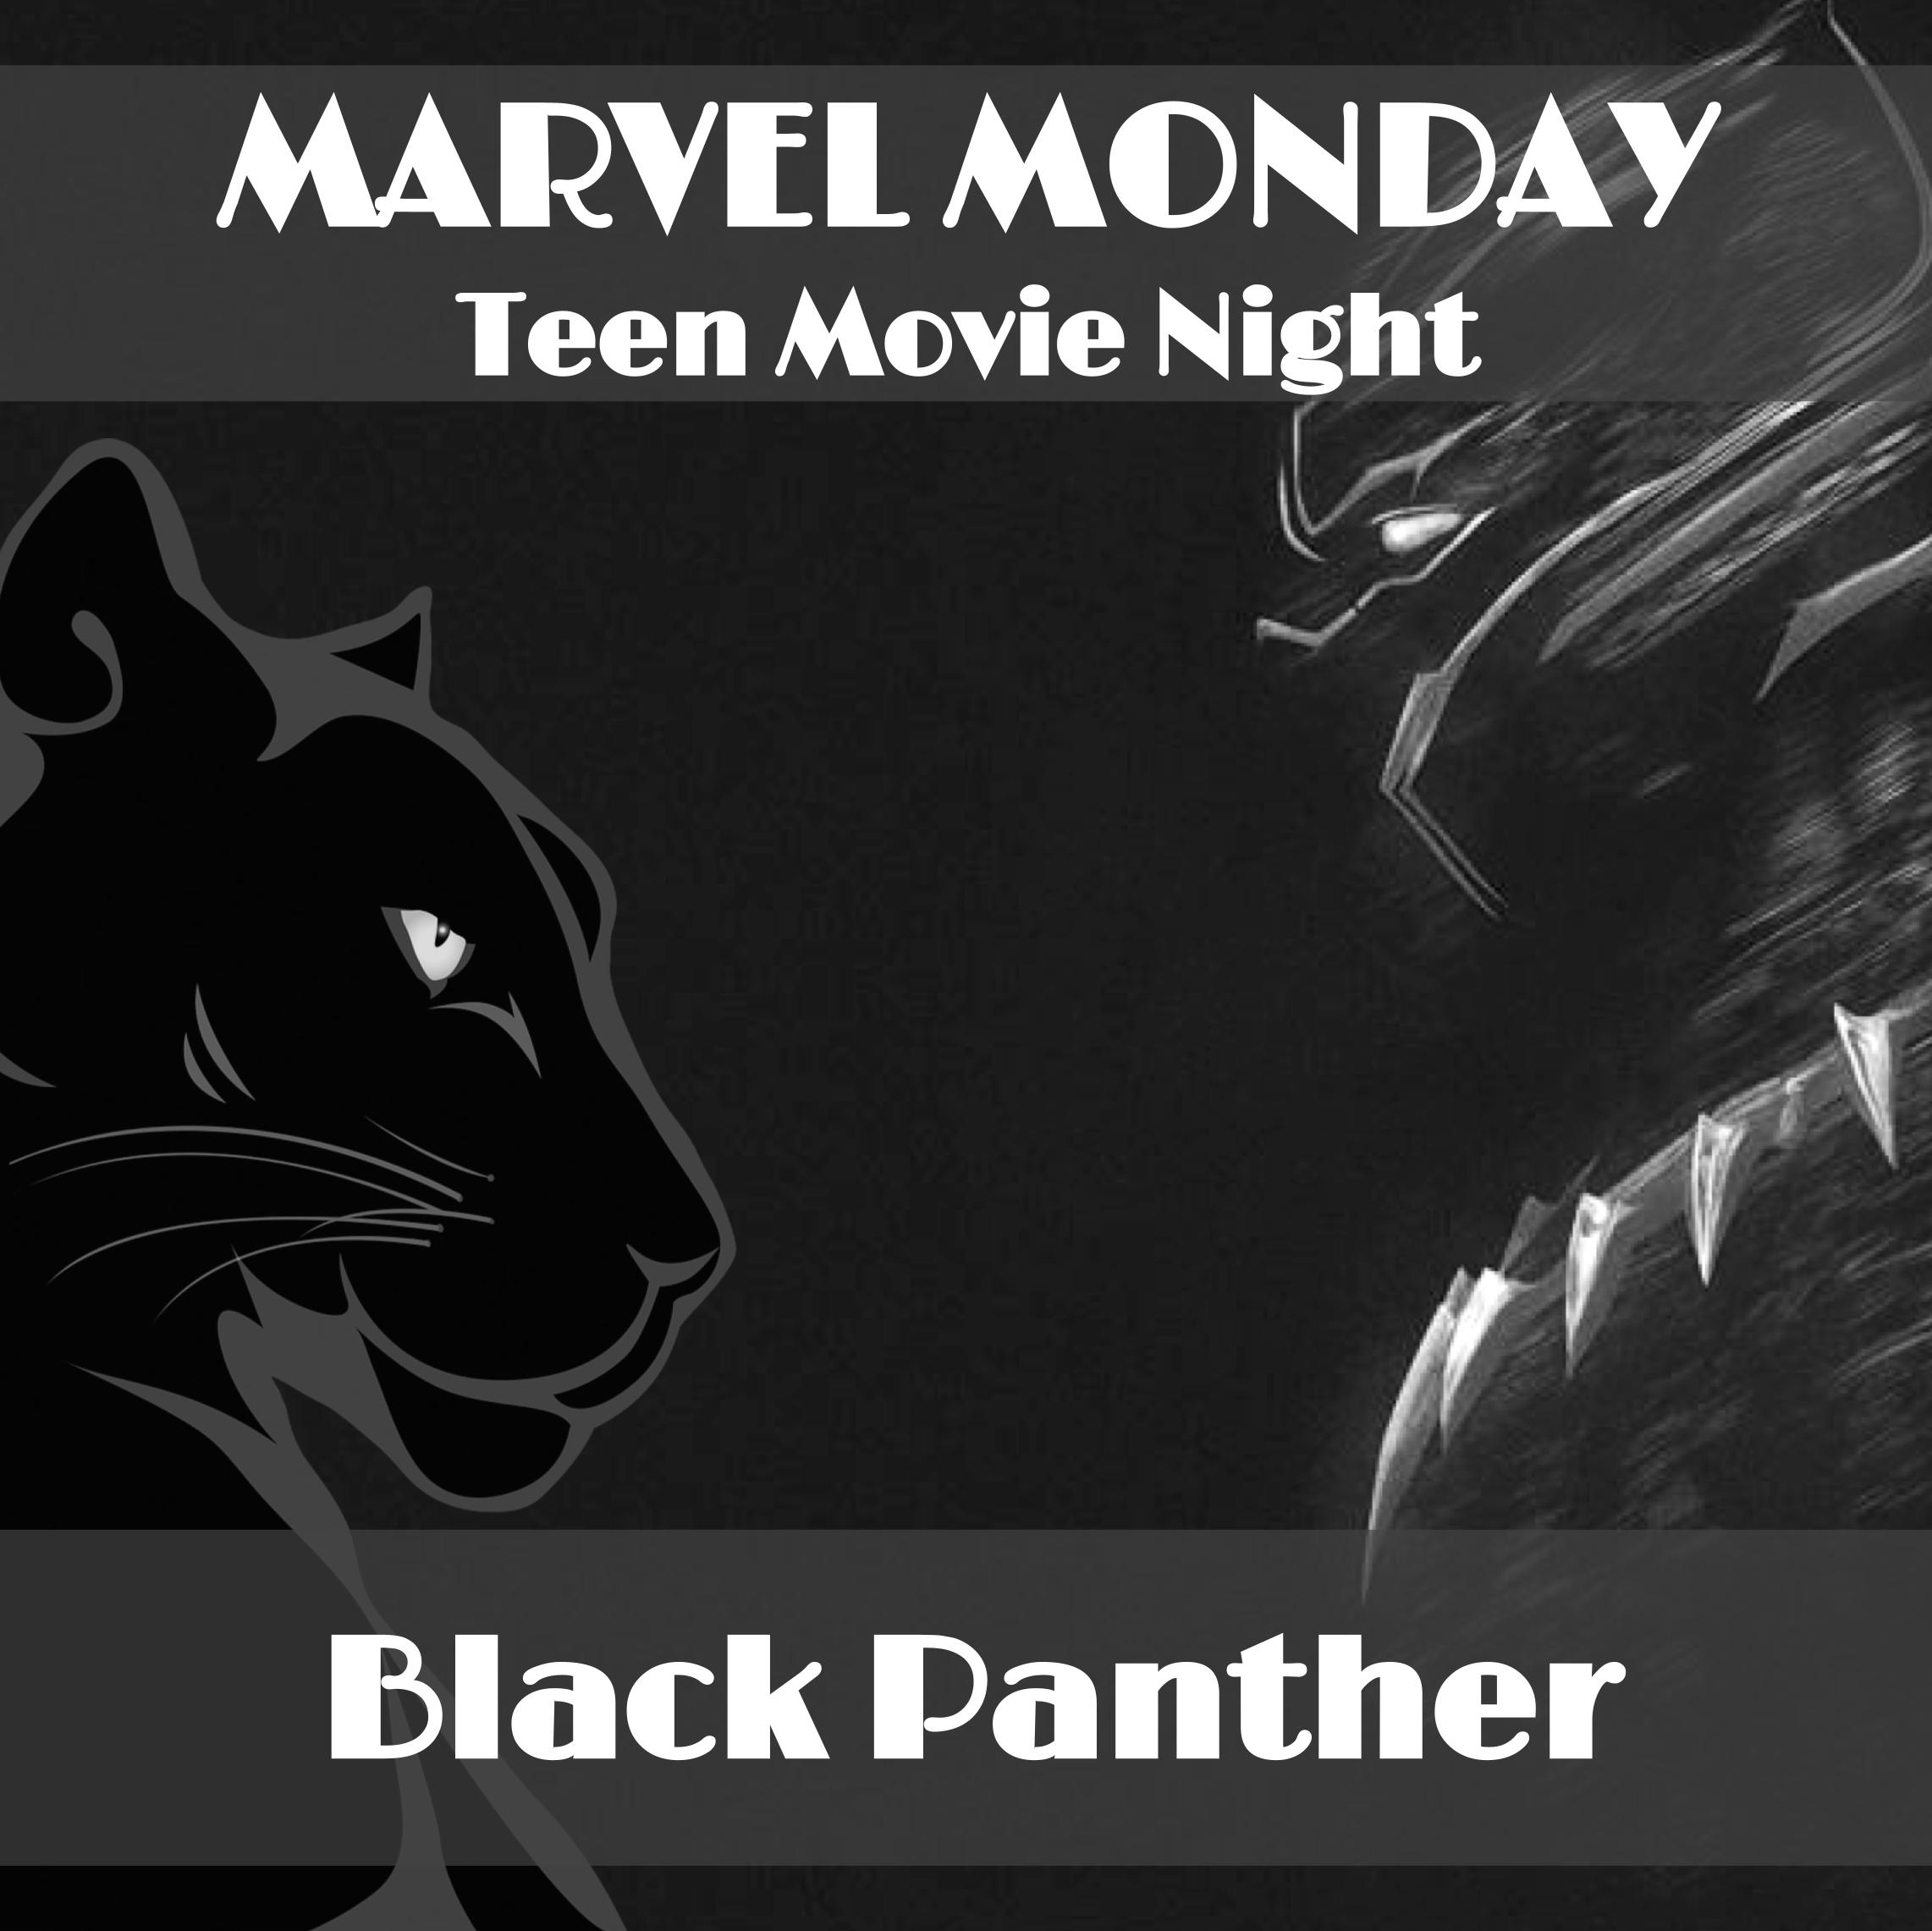 Marvel Monday - Black Panther